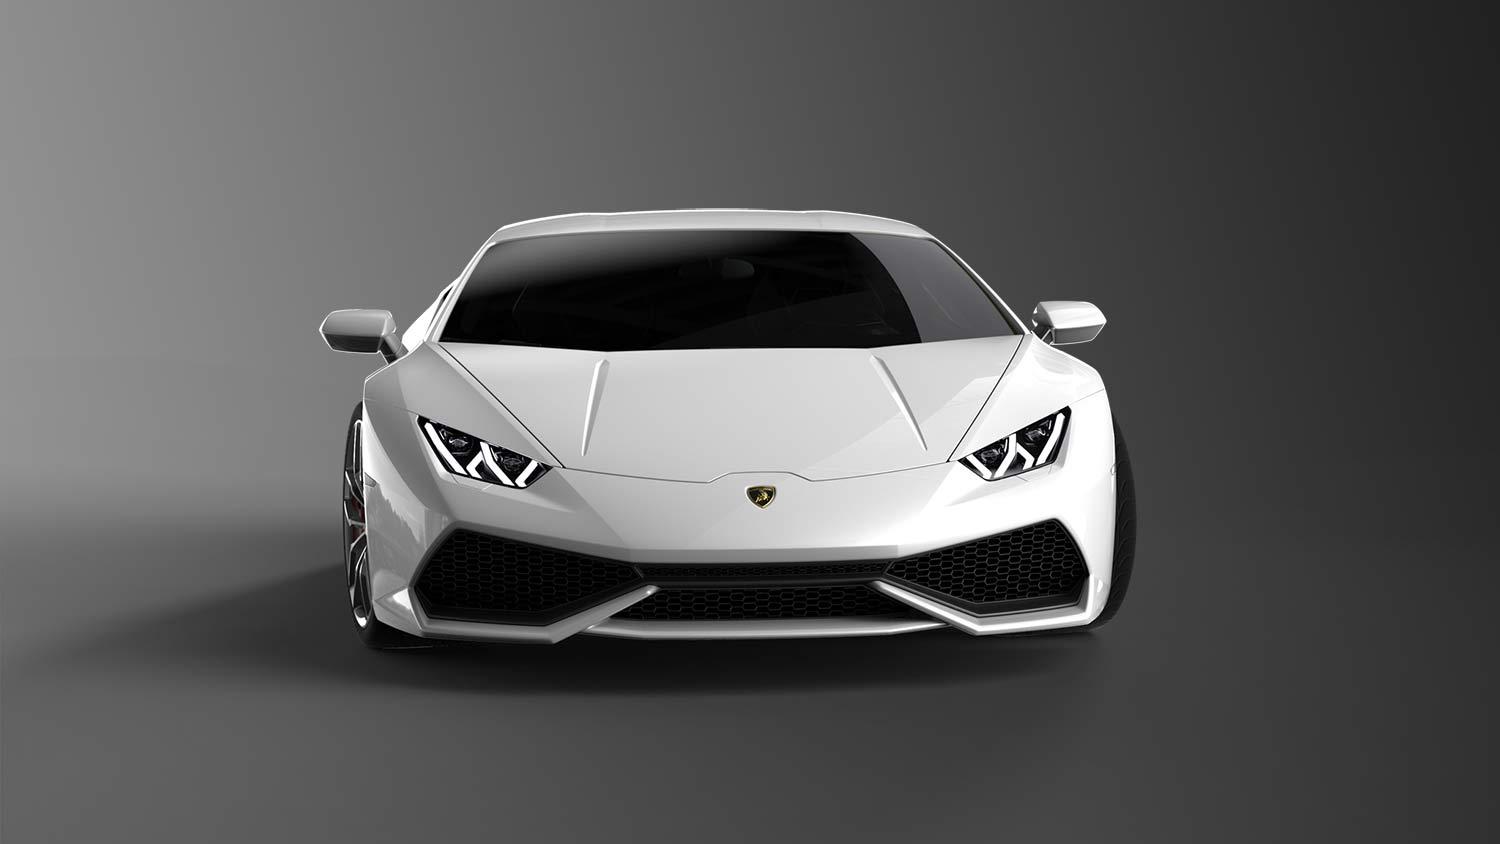 Lamborghini Huracán exterior front silver